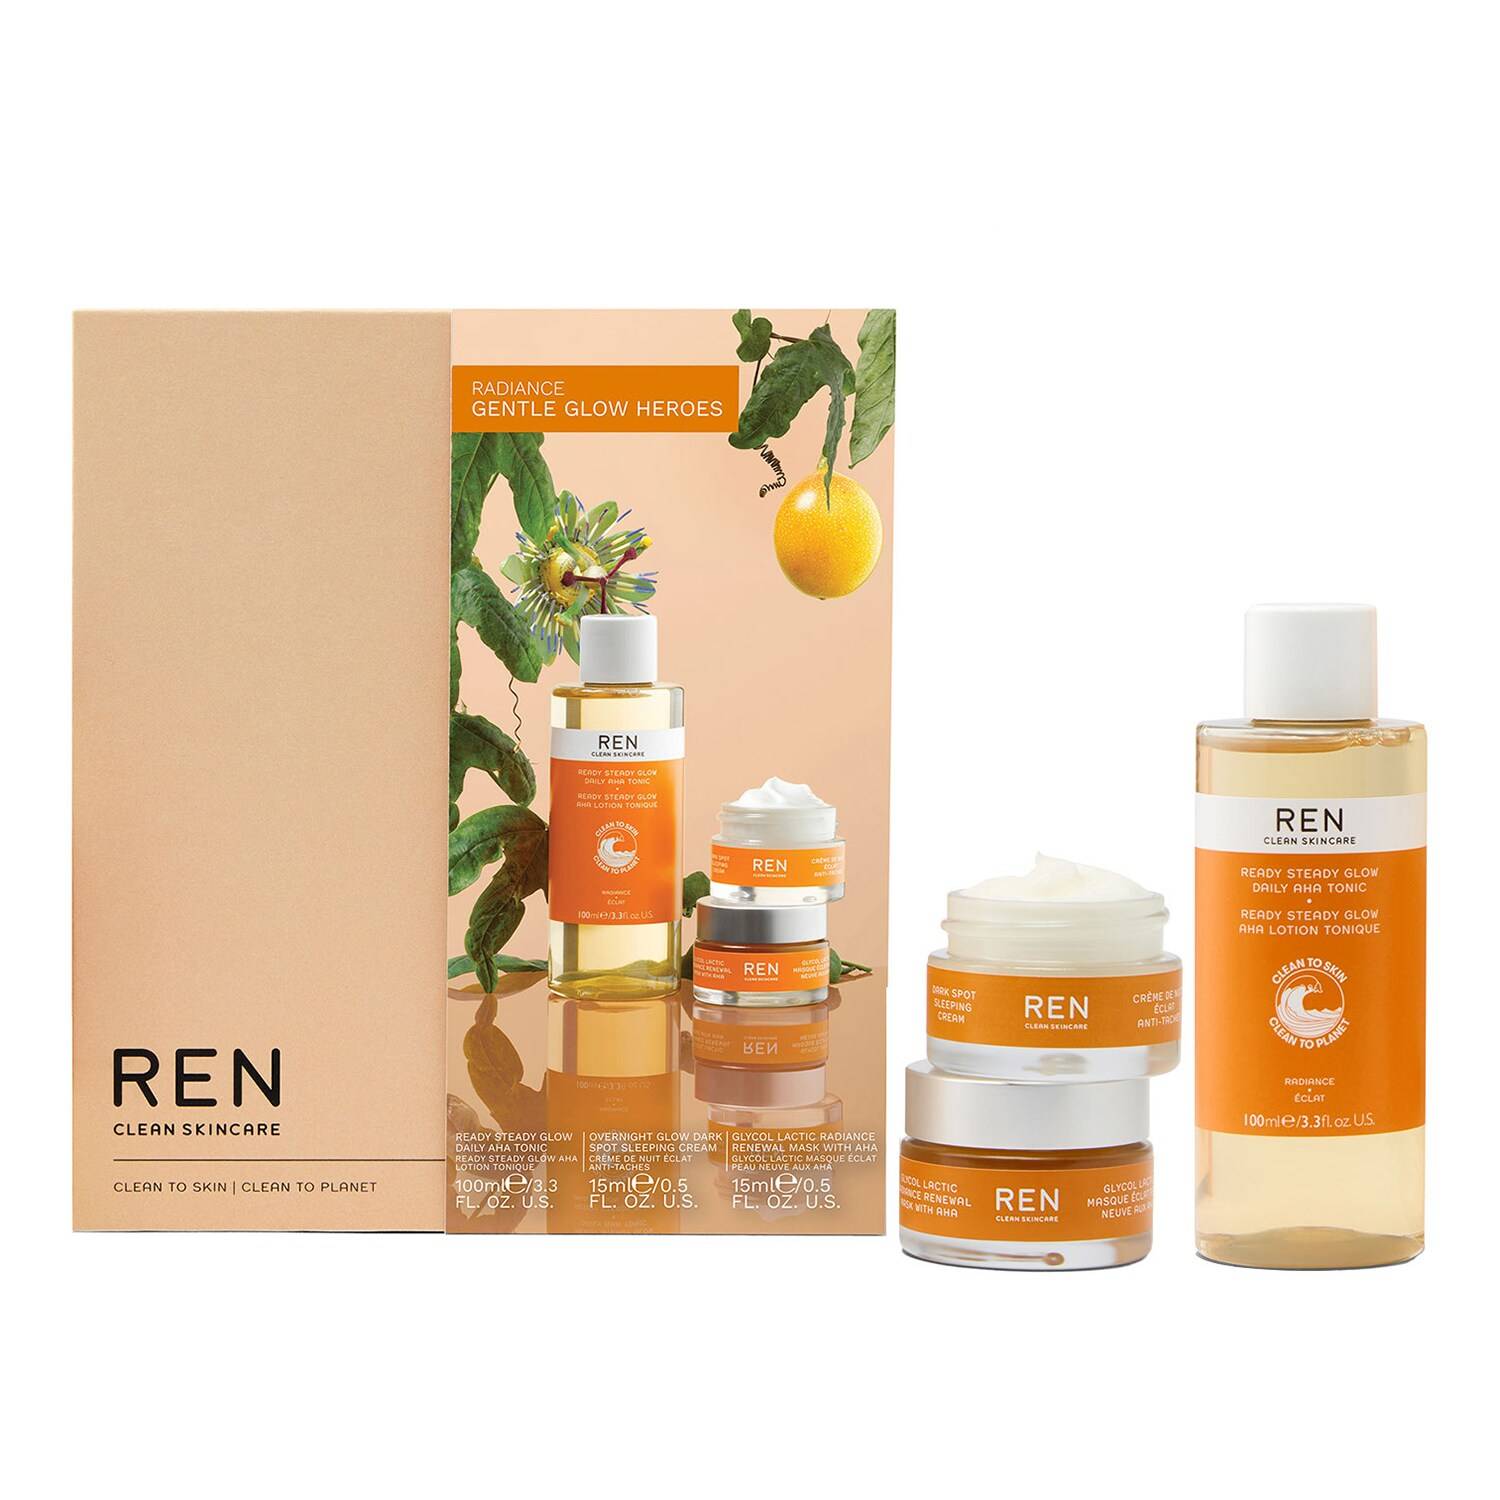 Ren Clean Skincare Radiance Gentle Glow Heroes Set